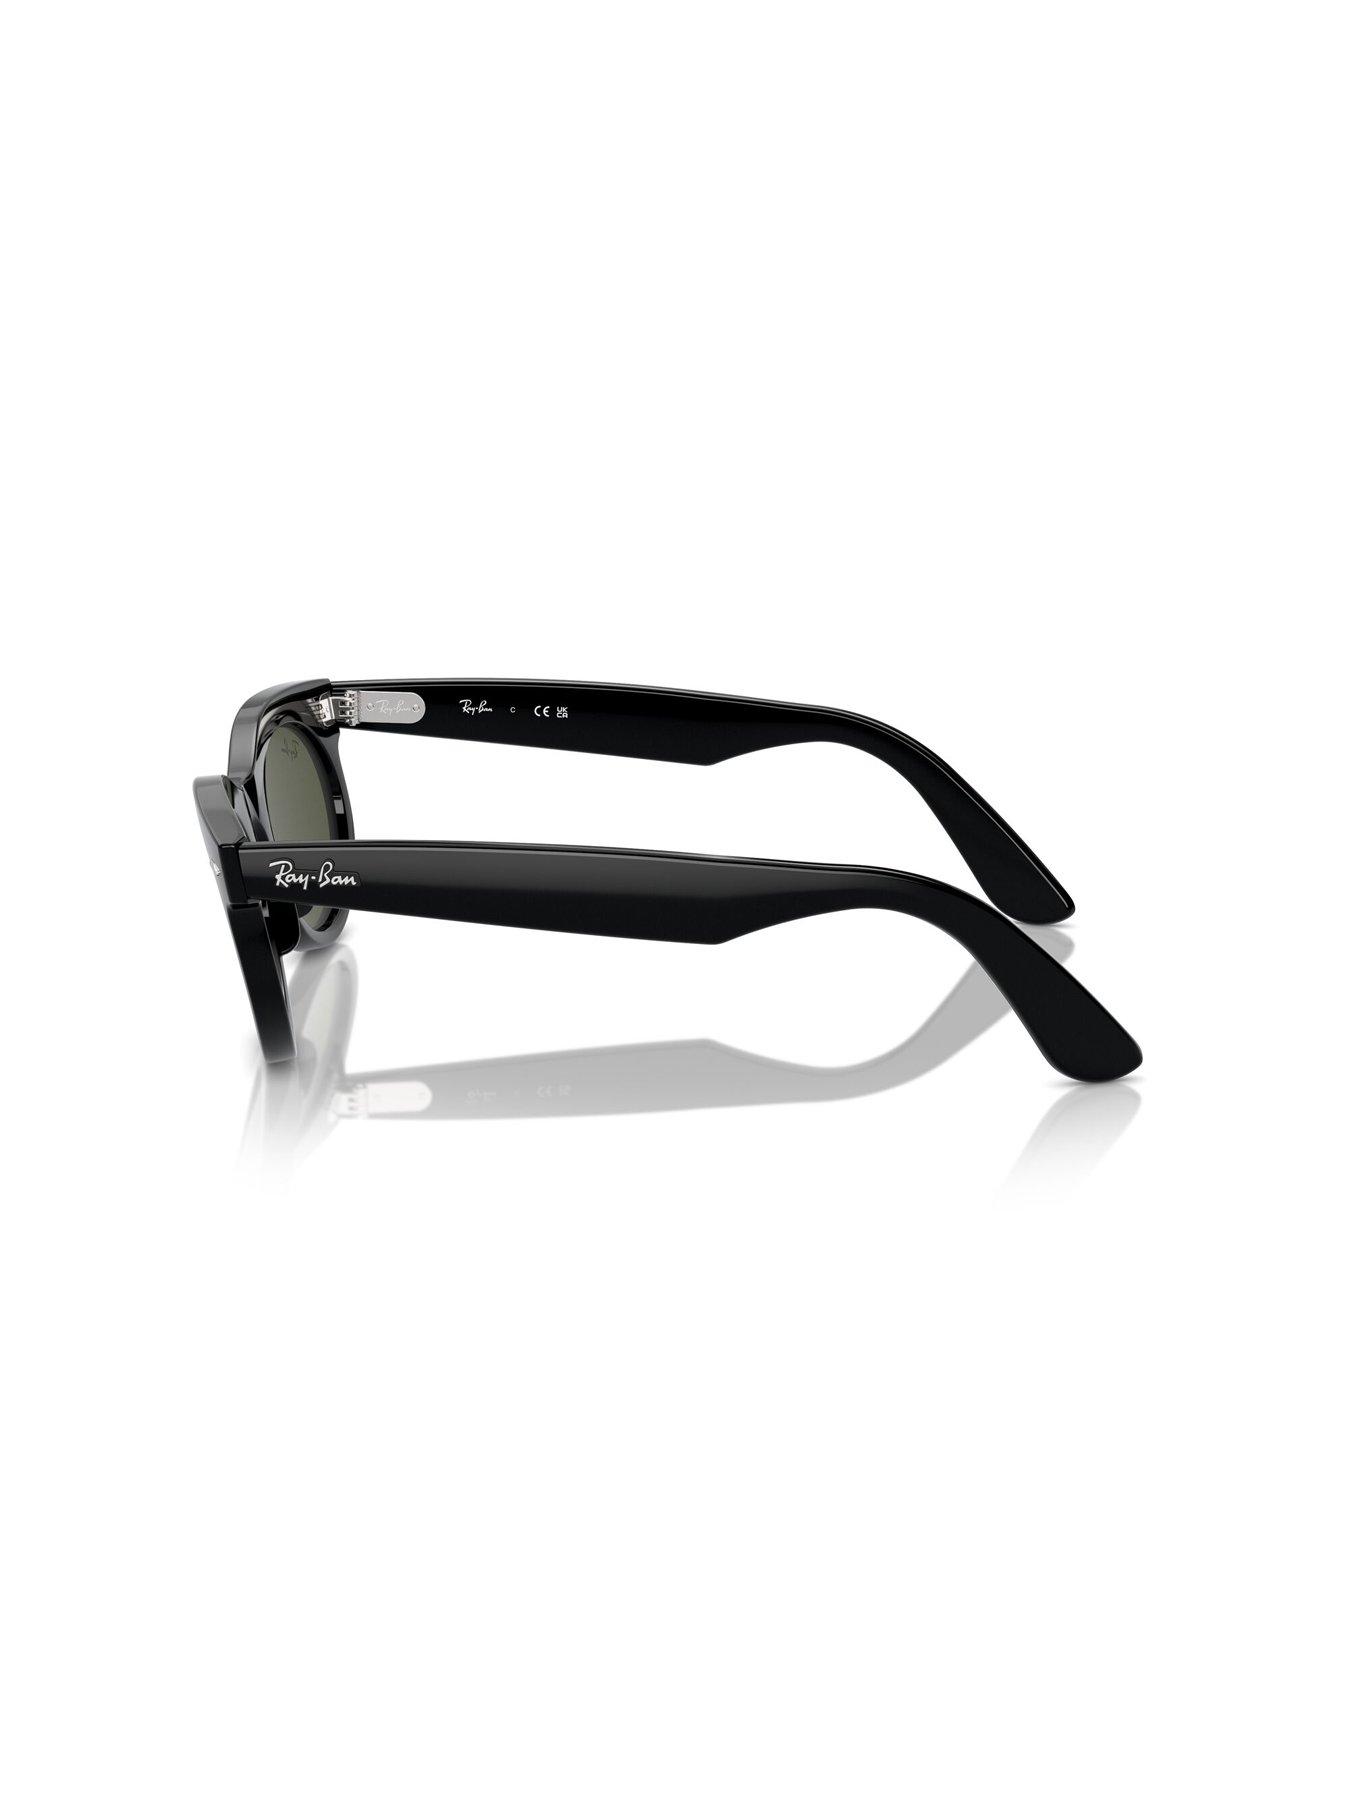 Ray-Ban Wayfarer Oval Sunglasses | Very.co.uk